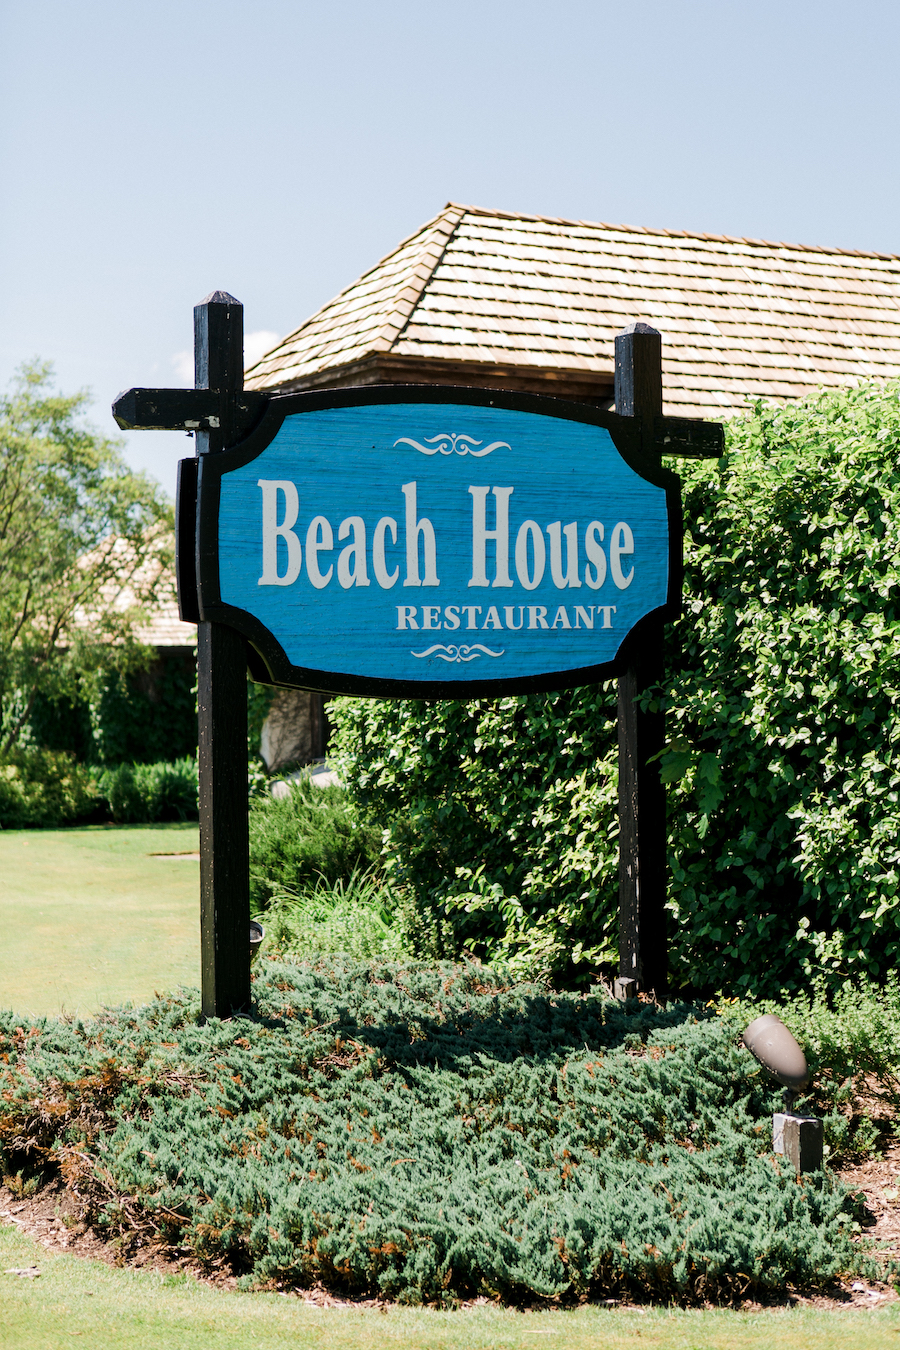 The Beach House at Boyne Mountain Resort